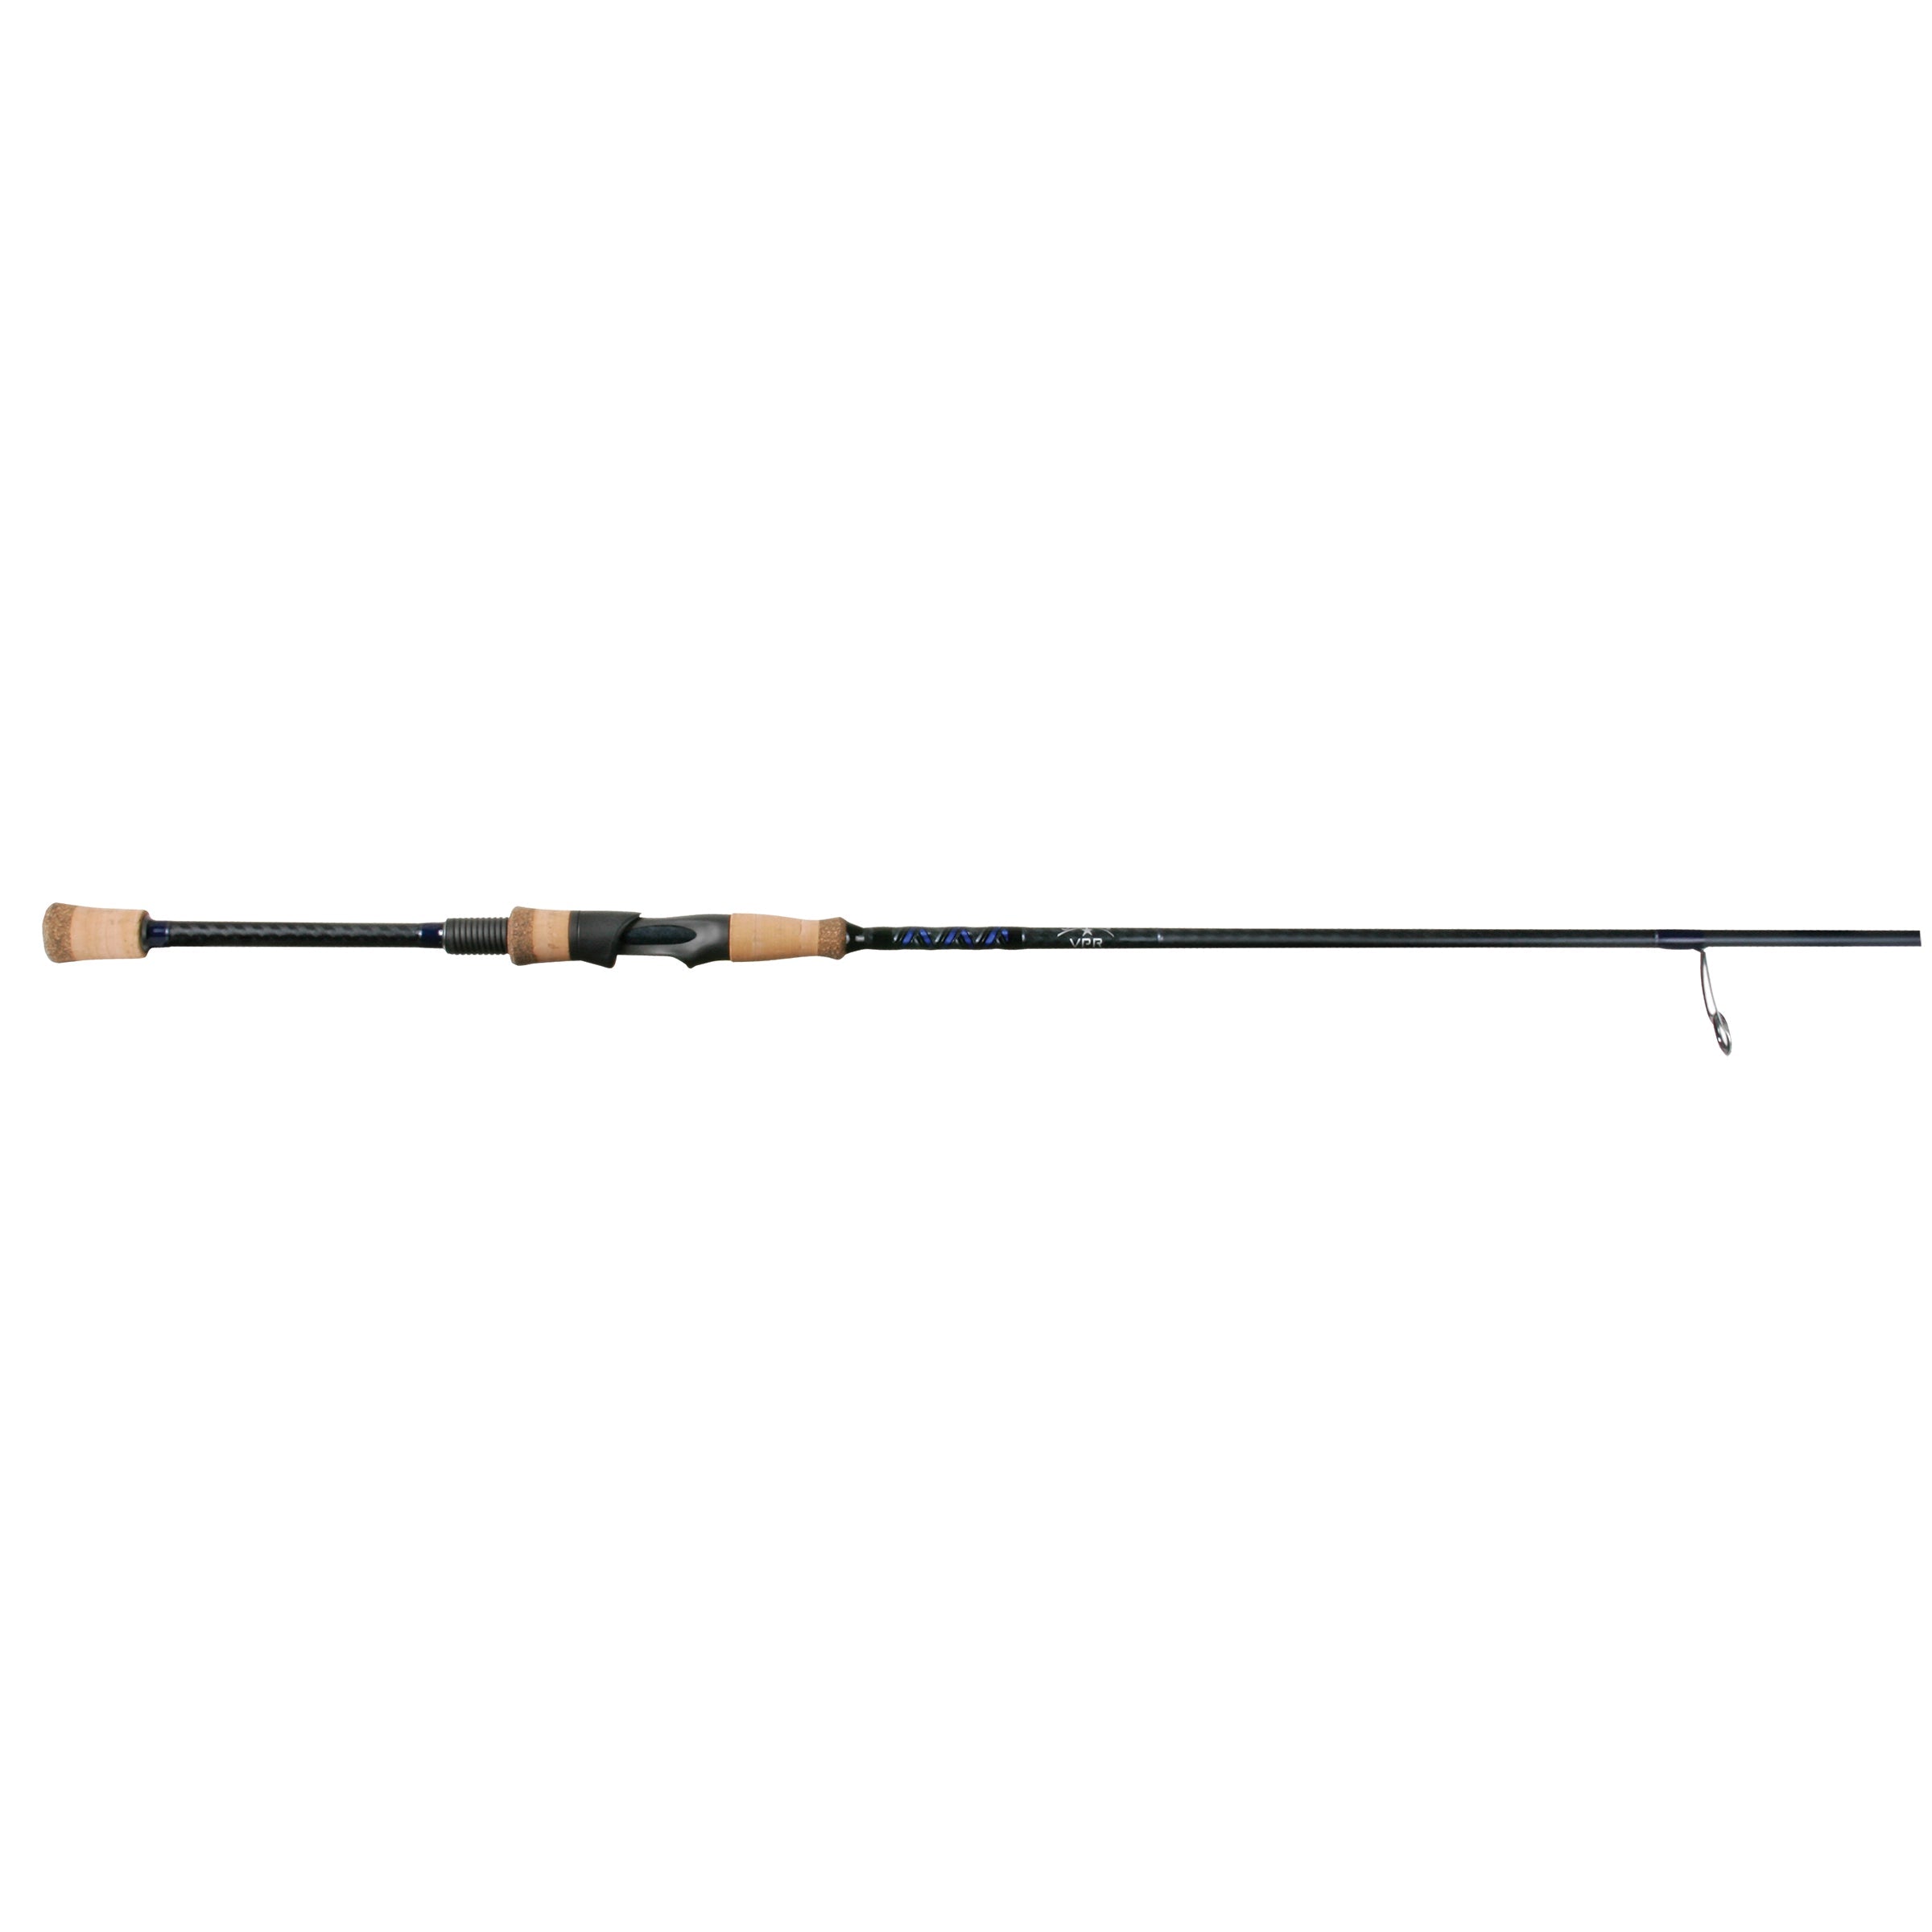 9 Feet Medium Heavy Fishing Spinning Rods for sale